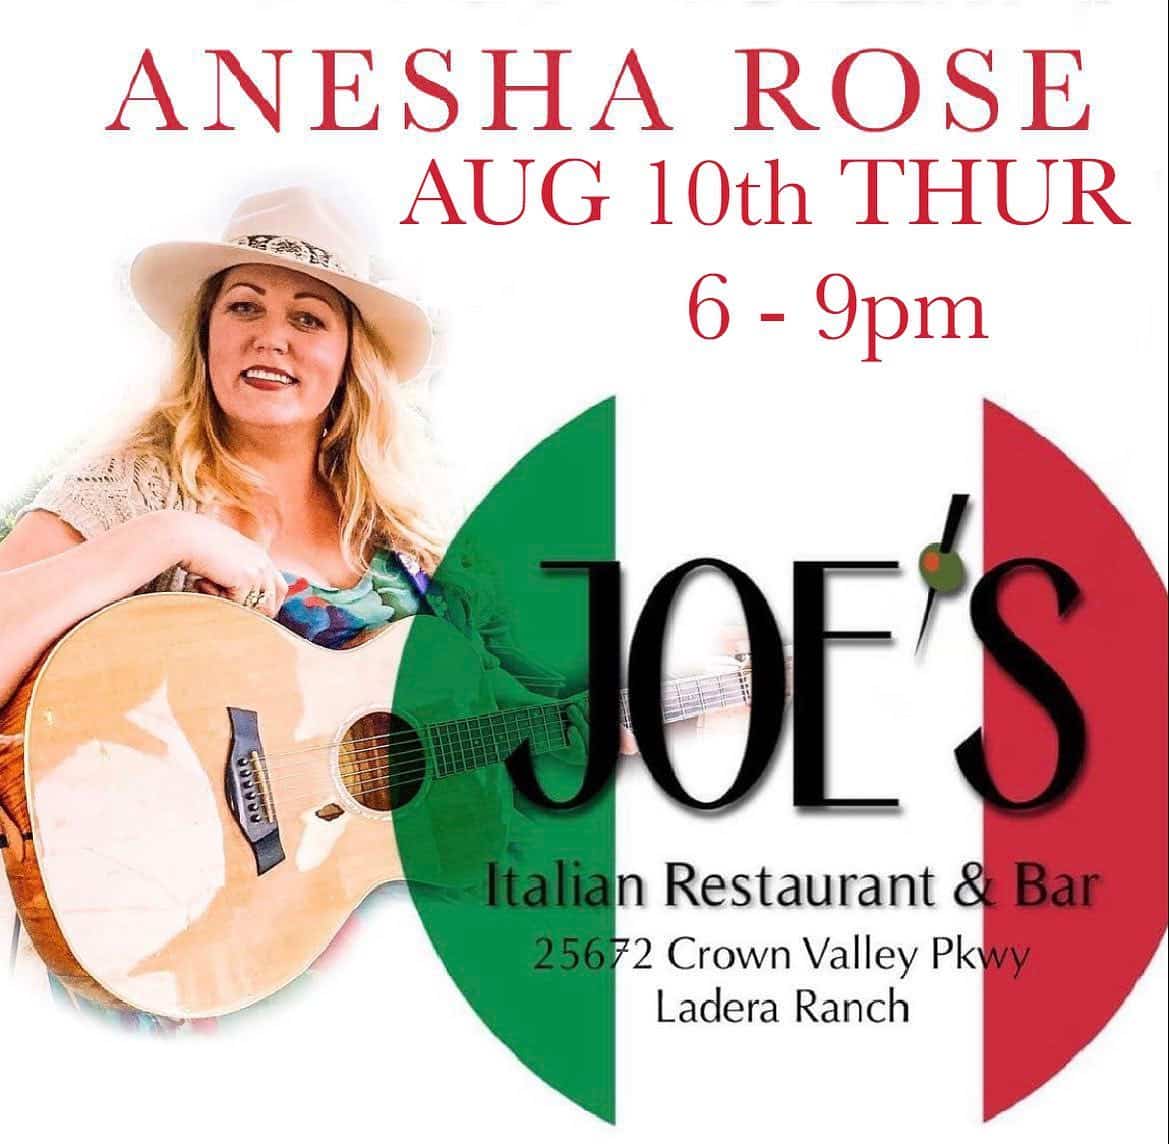 Anesha Rose at Joe's Italian Restaurant